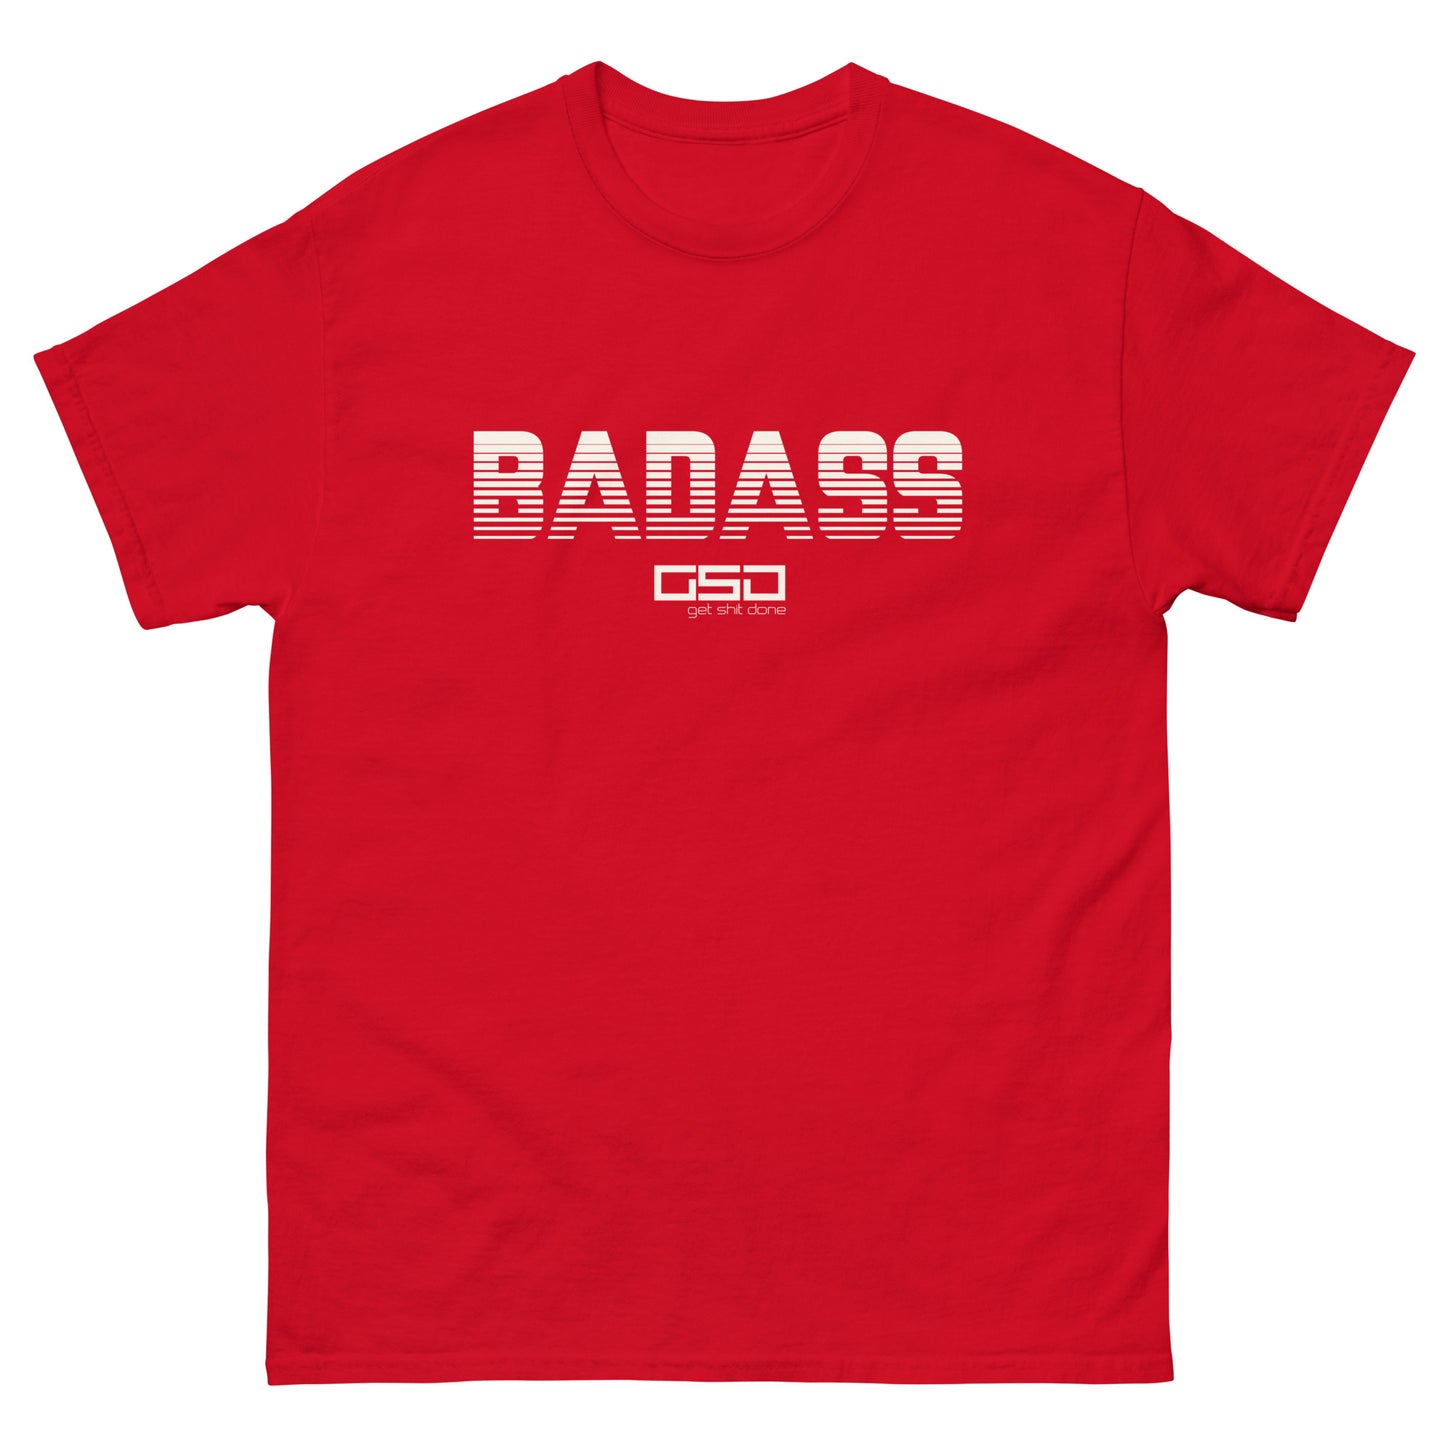 BADASS-Classic tee